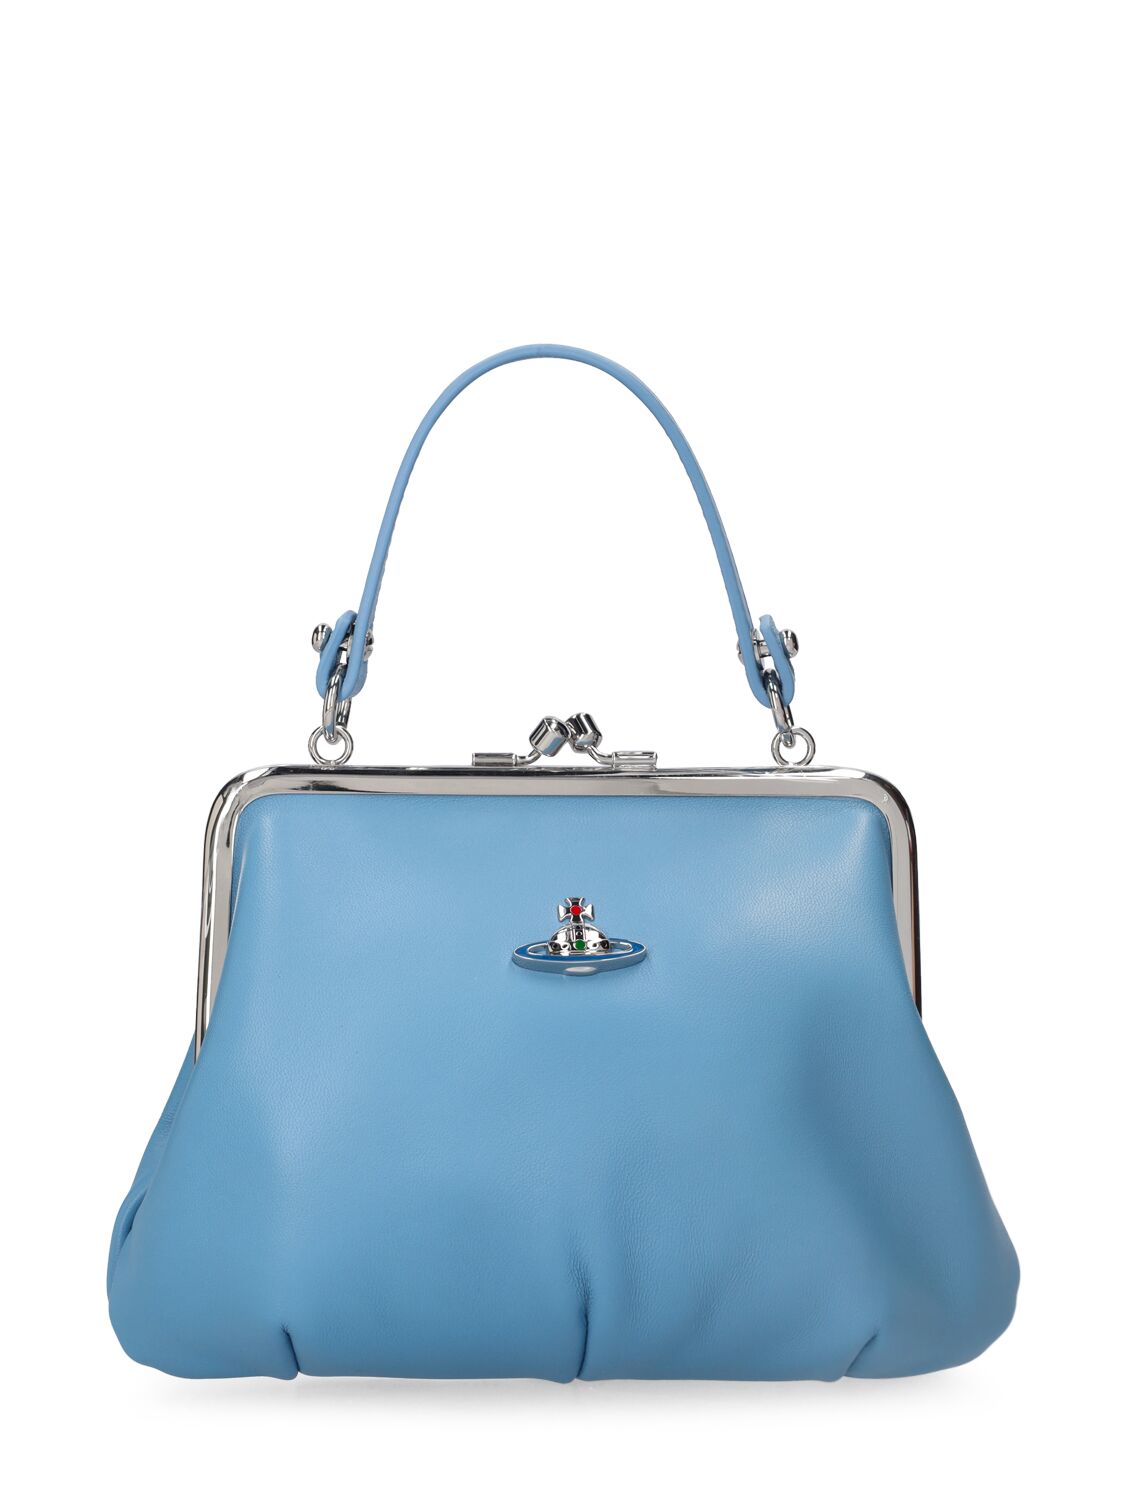 Vivienne Westwood Granny Frame Leather Top Handle Bag In Blue